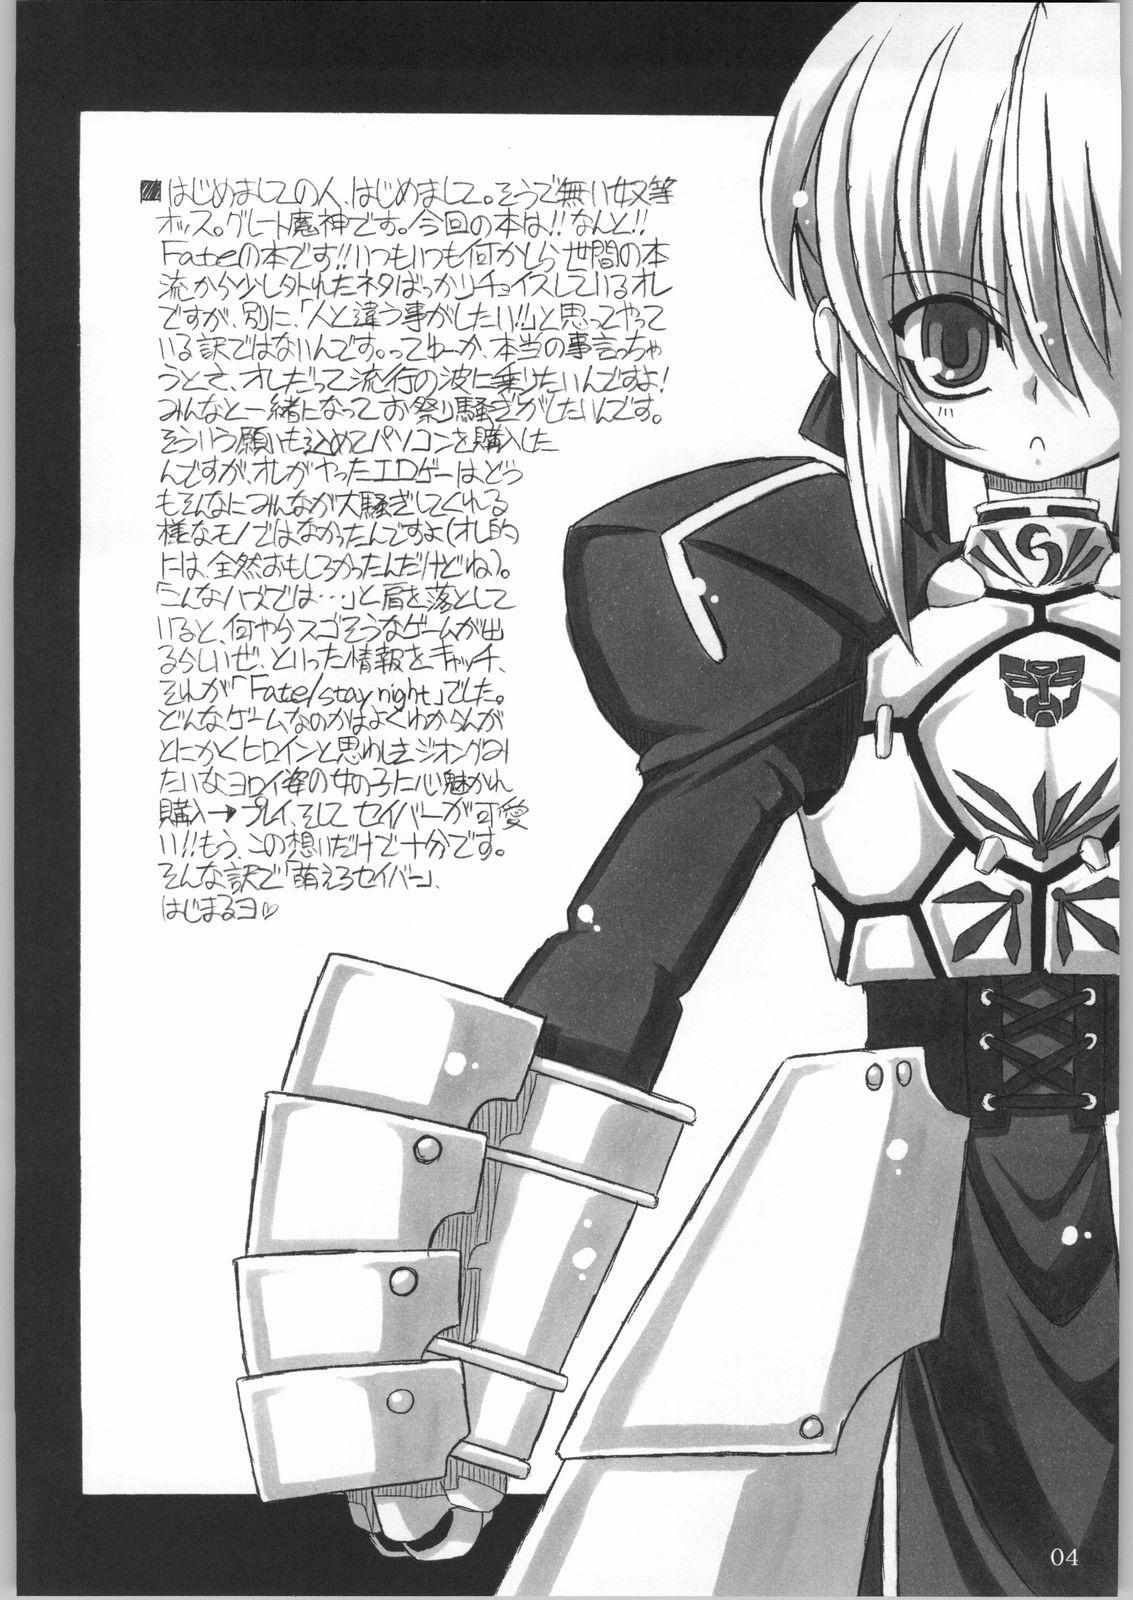 Face Entaku No Kishi Monogatari Moero Saber - Fate stay night T Girl - Page 3